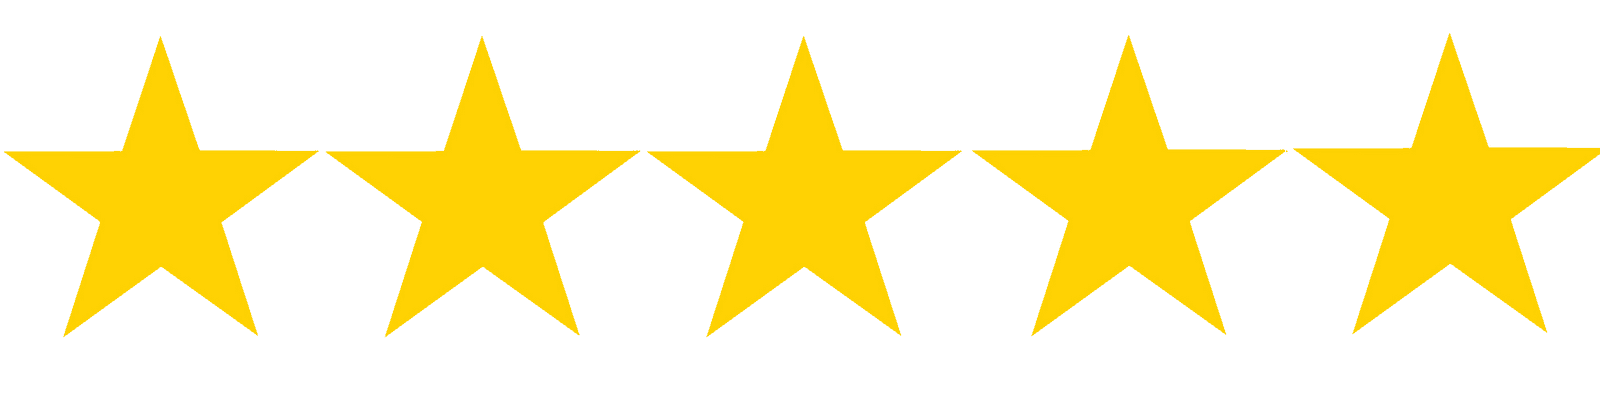 Image result for 5 star rating